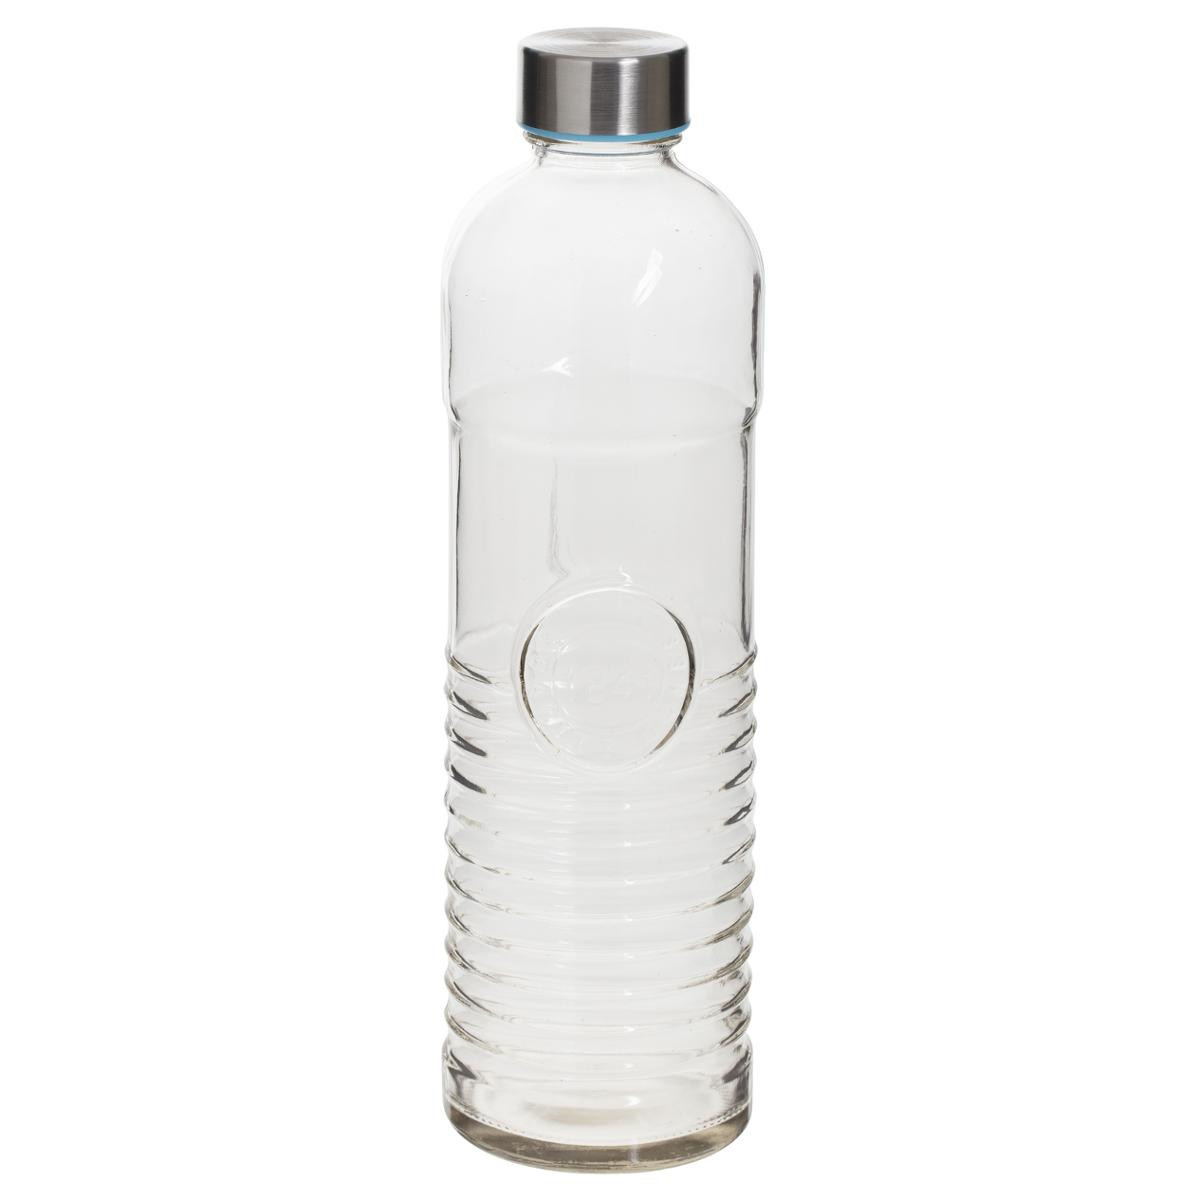 https://www.decomania.fr/702106-product_hd/bouteille-babord-en-verre-1-litre.jpg